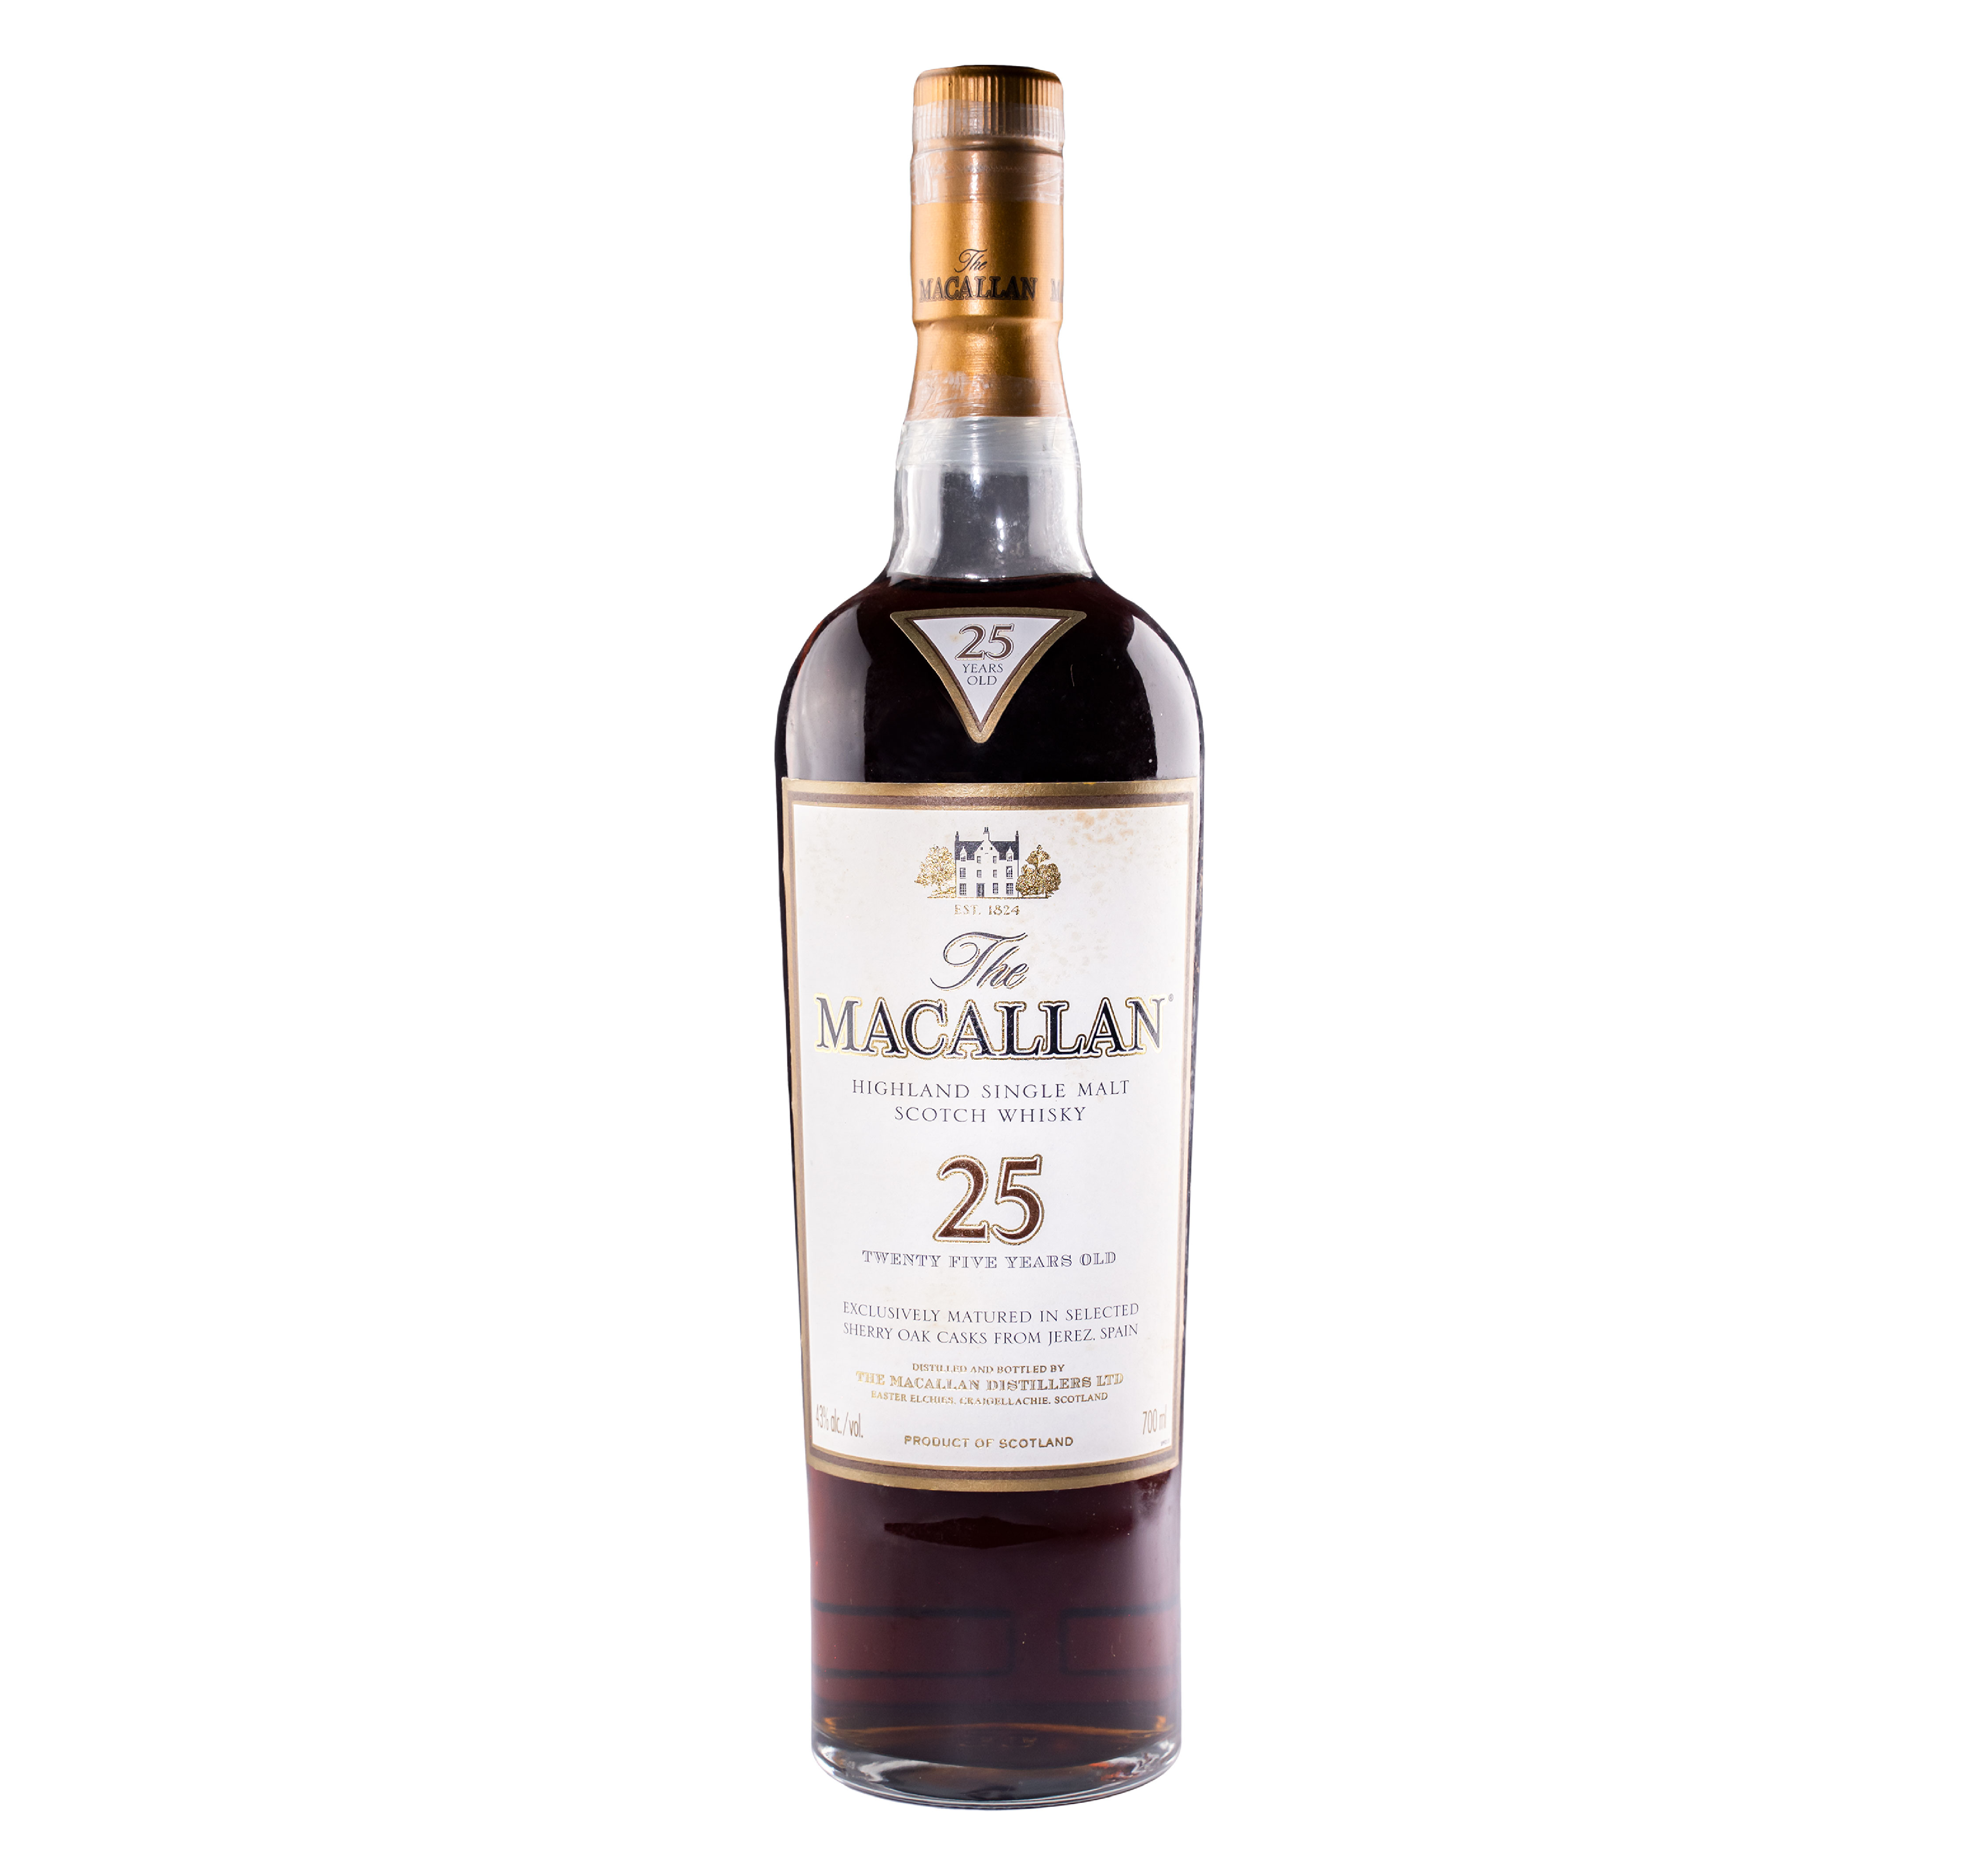 The Macallan 25 Years Old Highland Single Malt Scotch Whisky